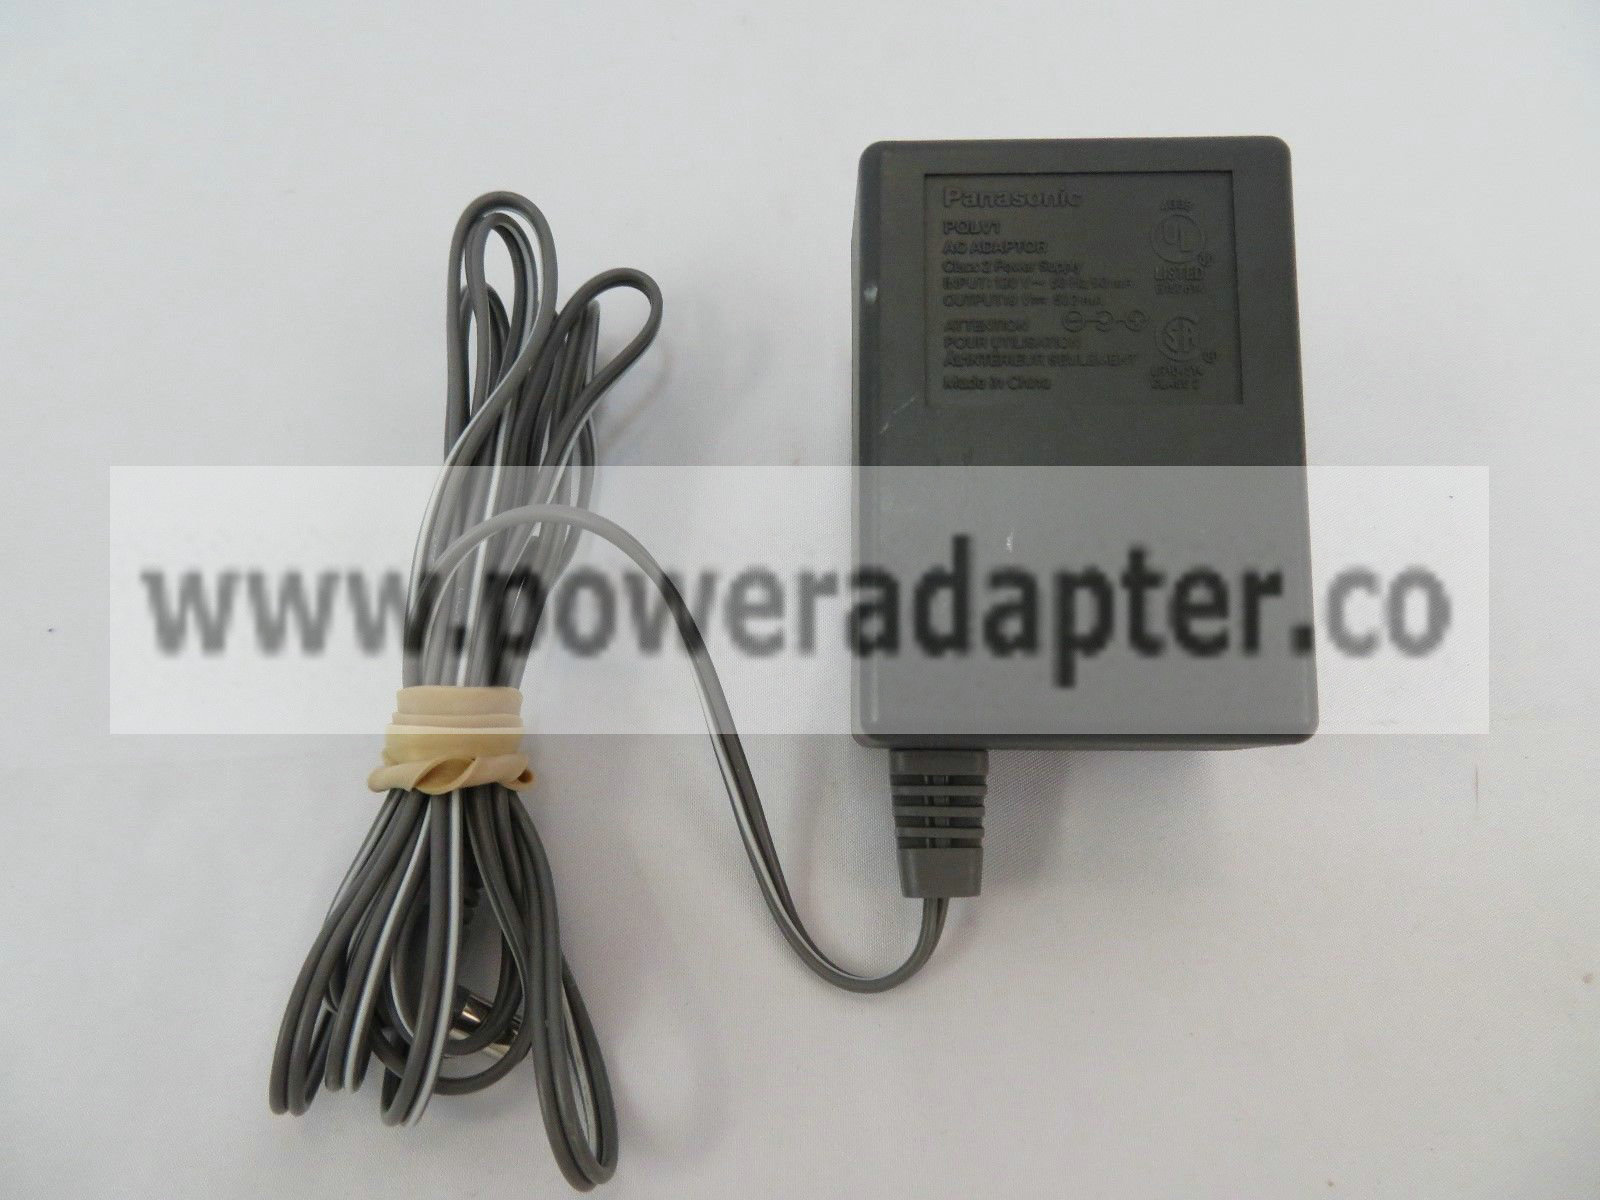 9V Dc 500mA Genuine Panasonic PQLV1 AC Power Supply Adapter Charger (9V DC, 500mA) Brand: Panasonic Model no: PQ